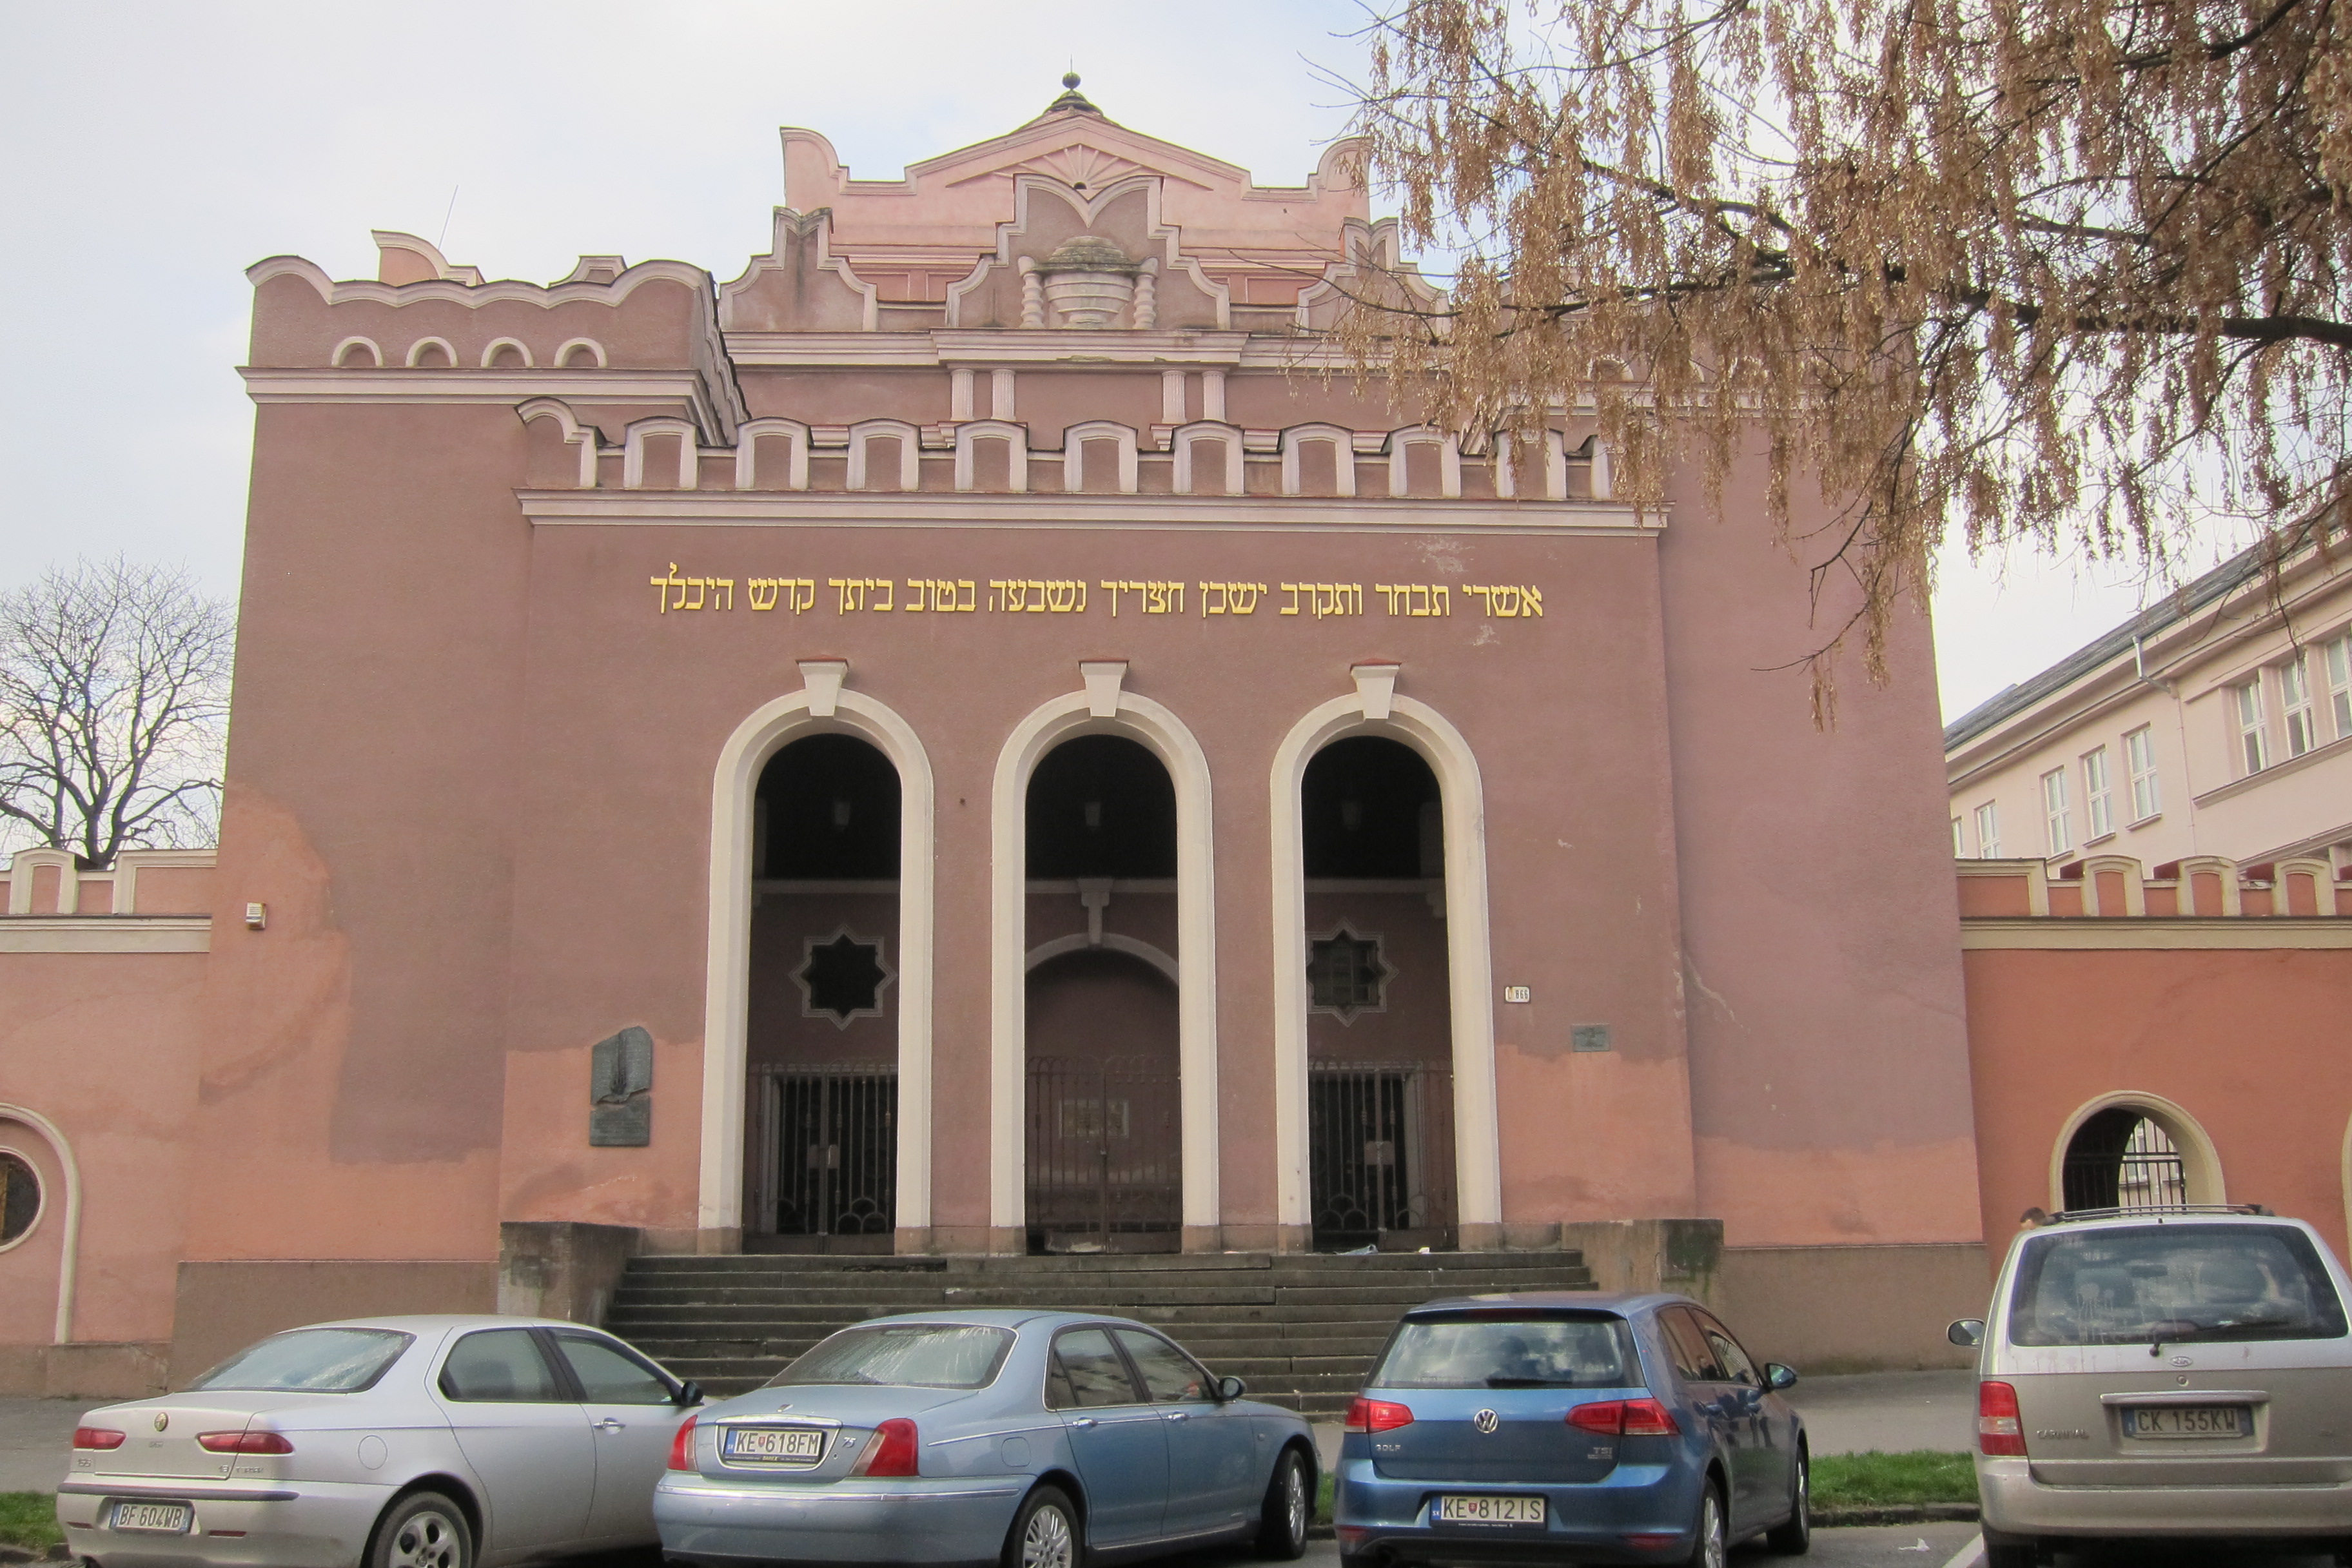 Orthodox_Synagogue_2013_Copyright_M.Isenberg_2013